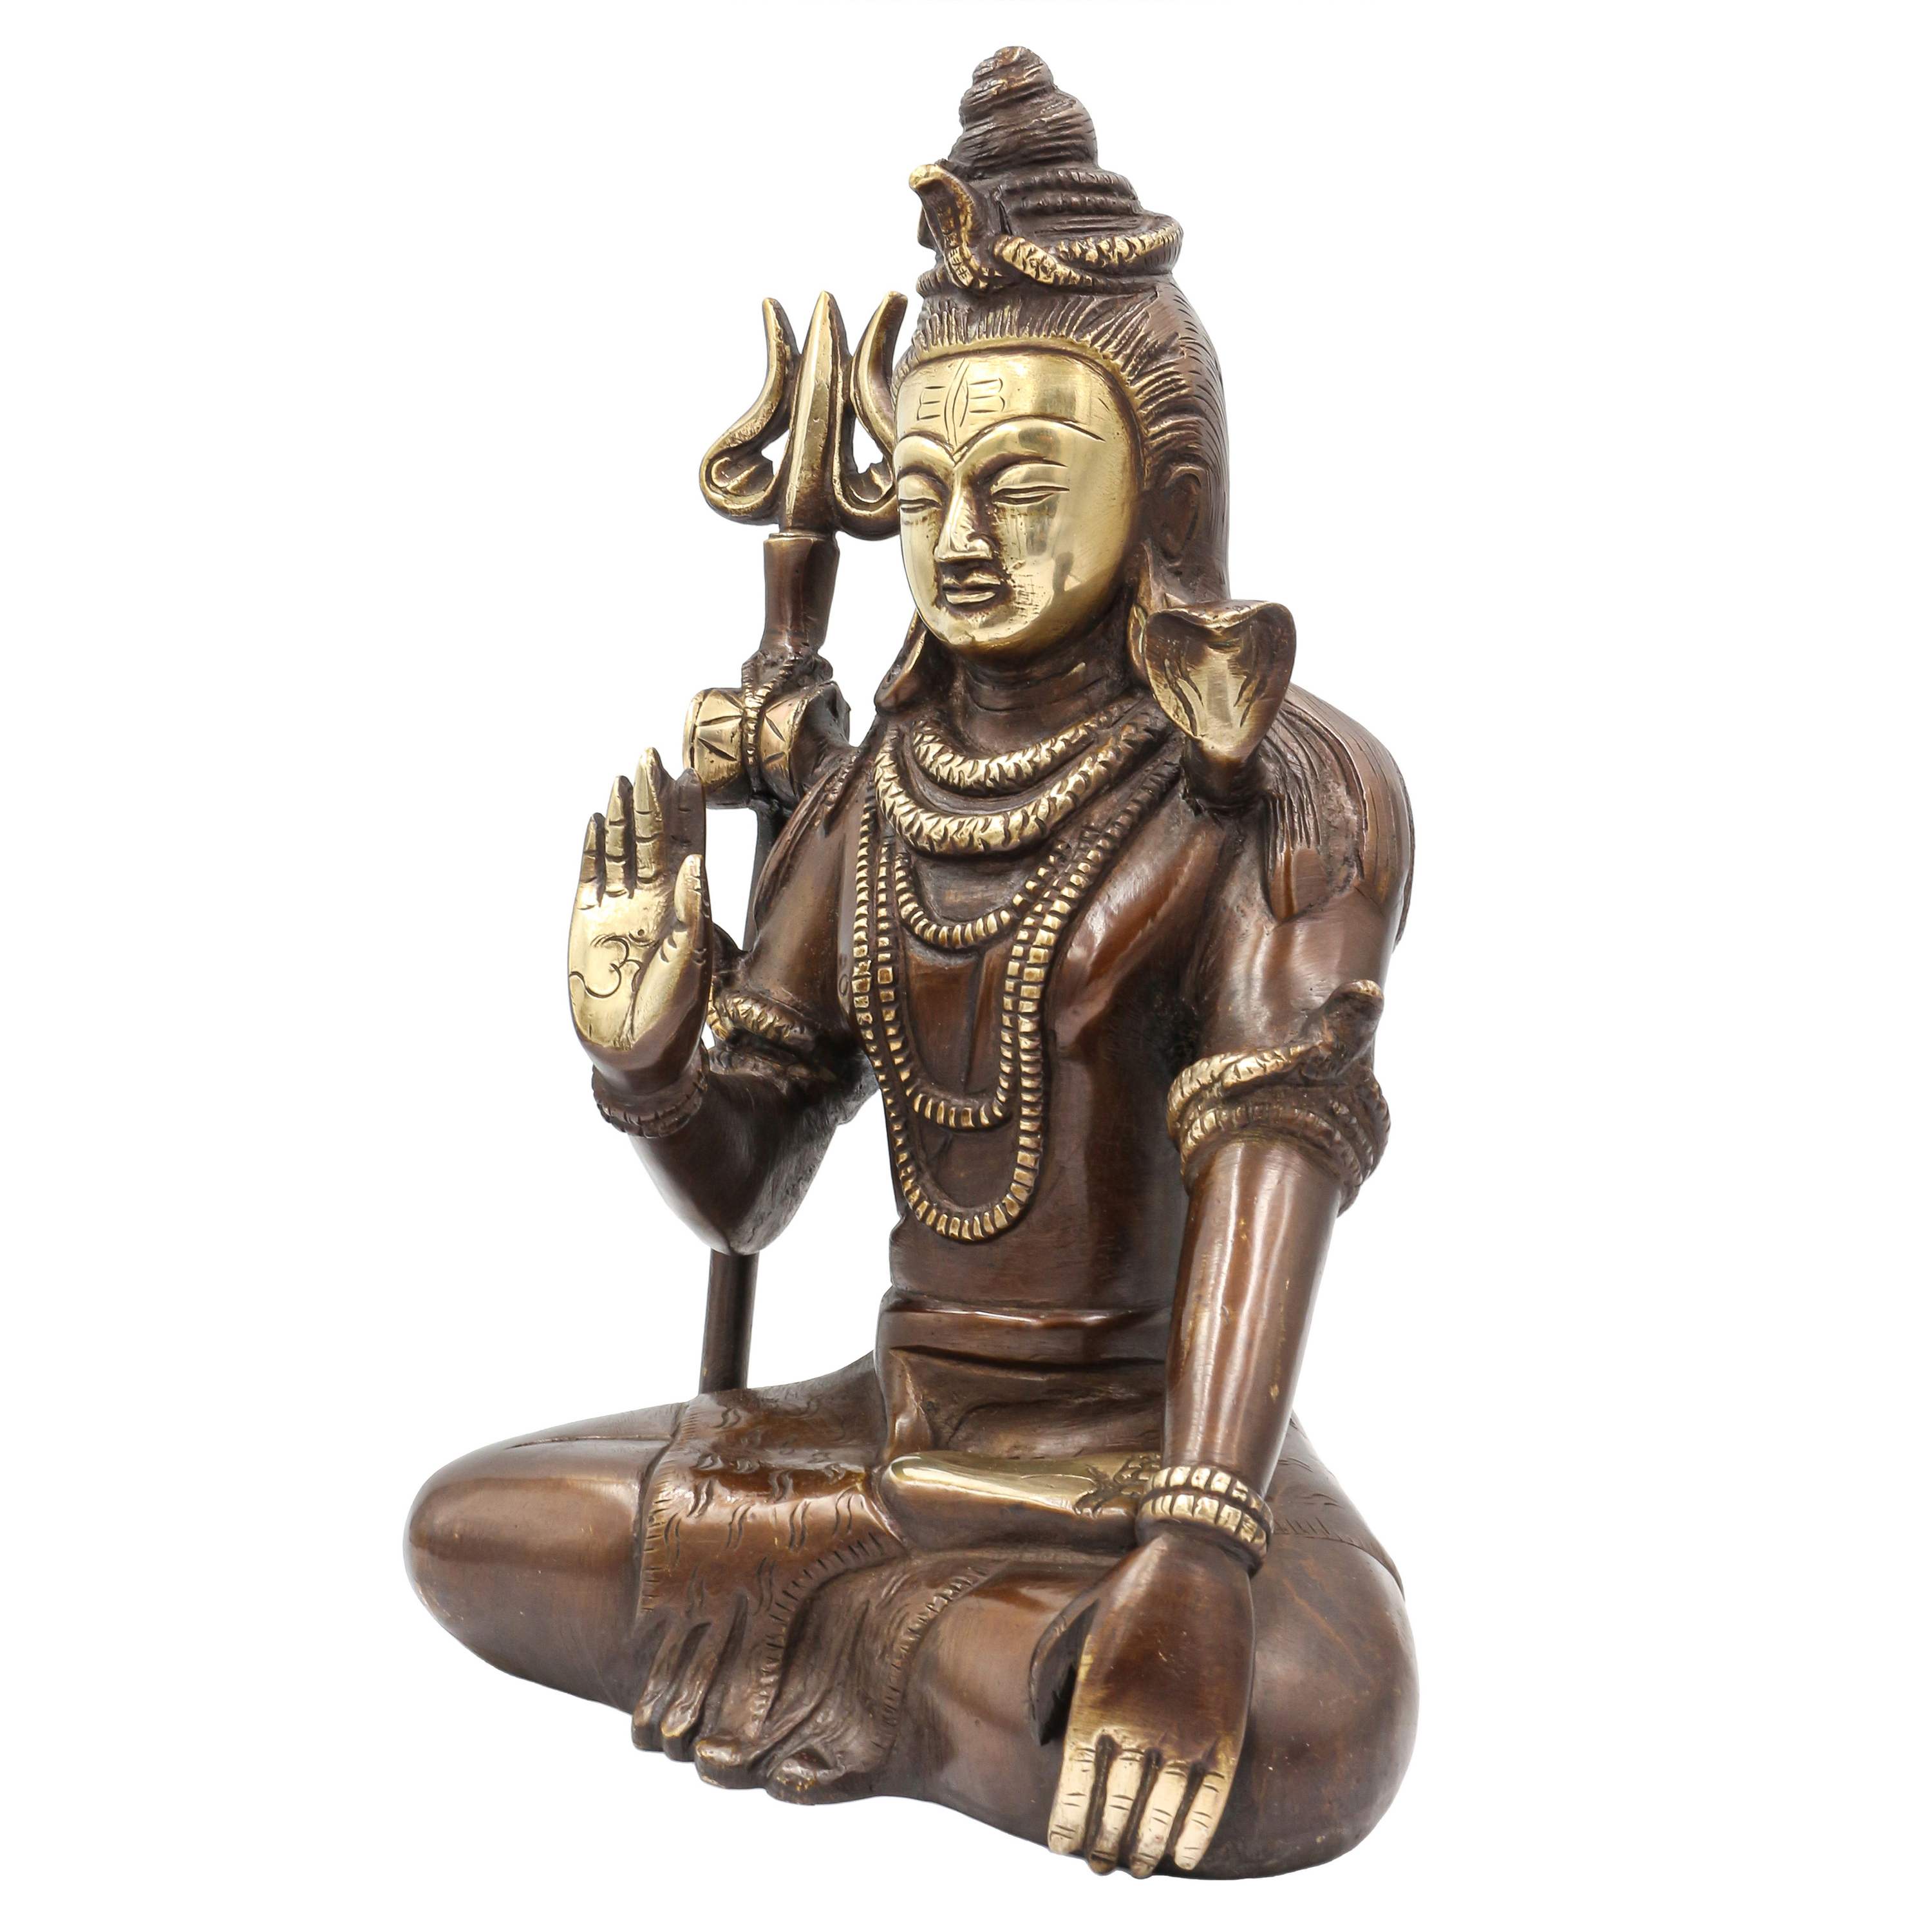 Nepali Statue Of Shiva, sand Casting, chocolate Oxidized